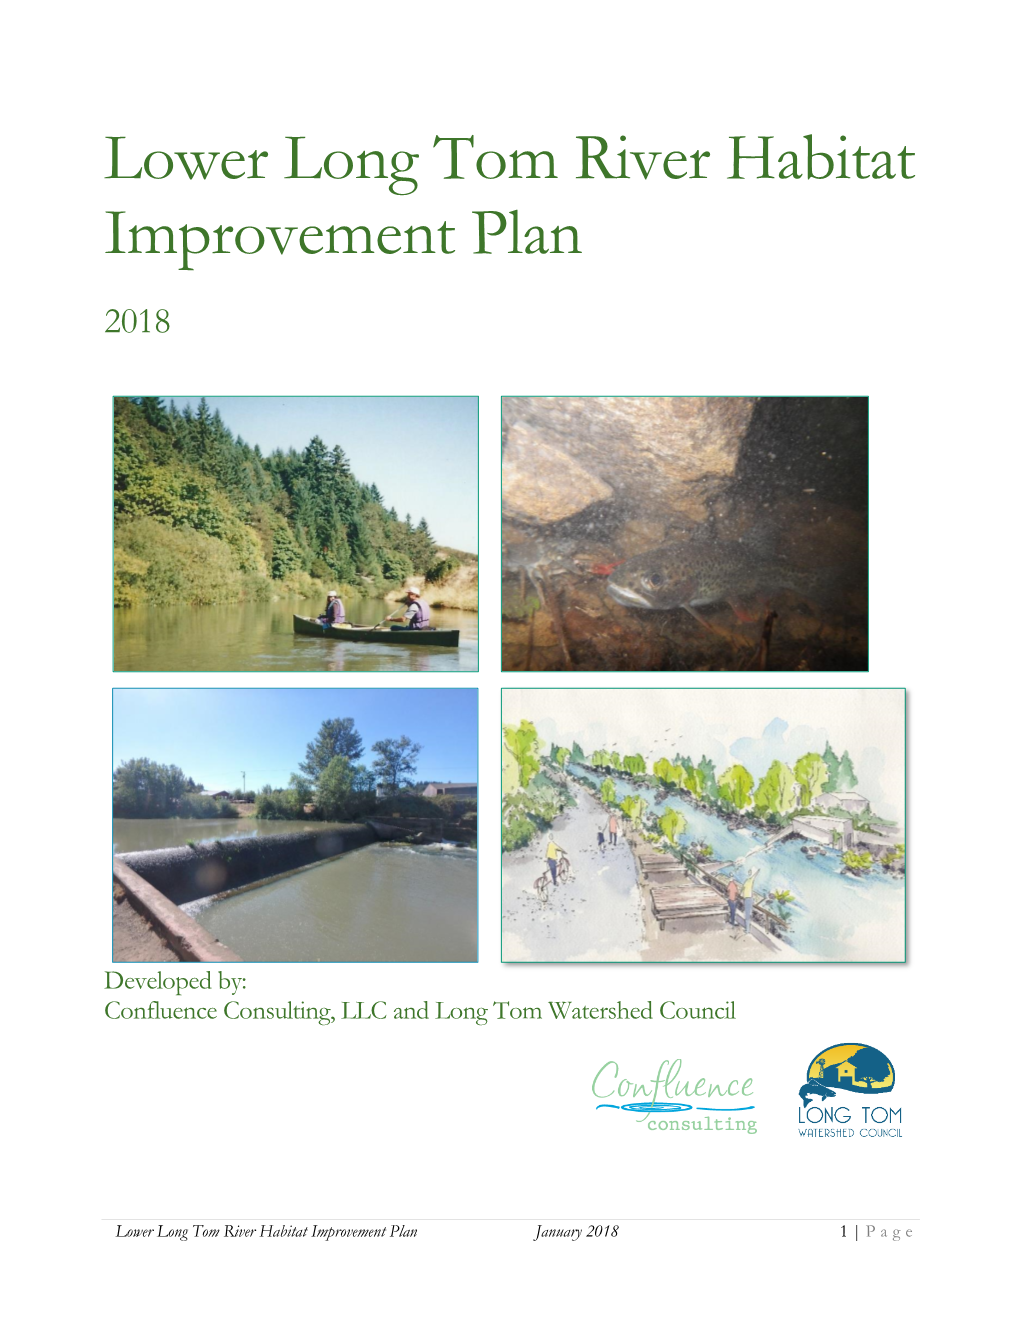 Lower Long Tom River Haibtat Improvement Project